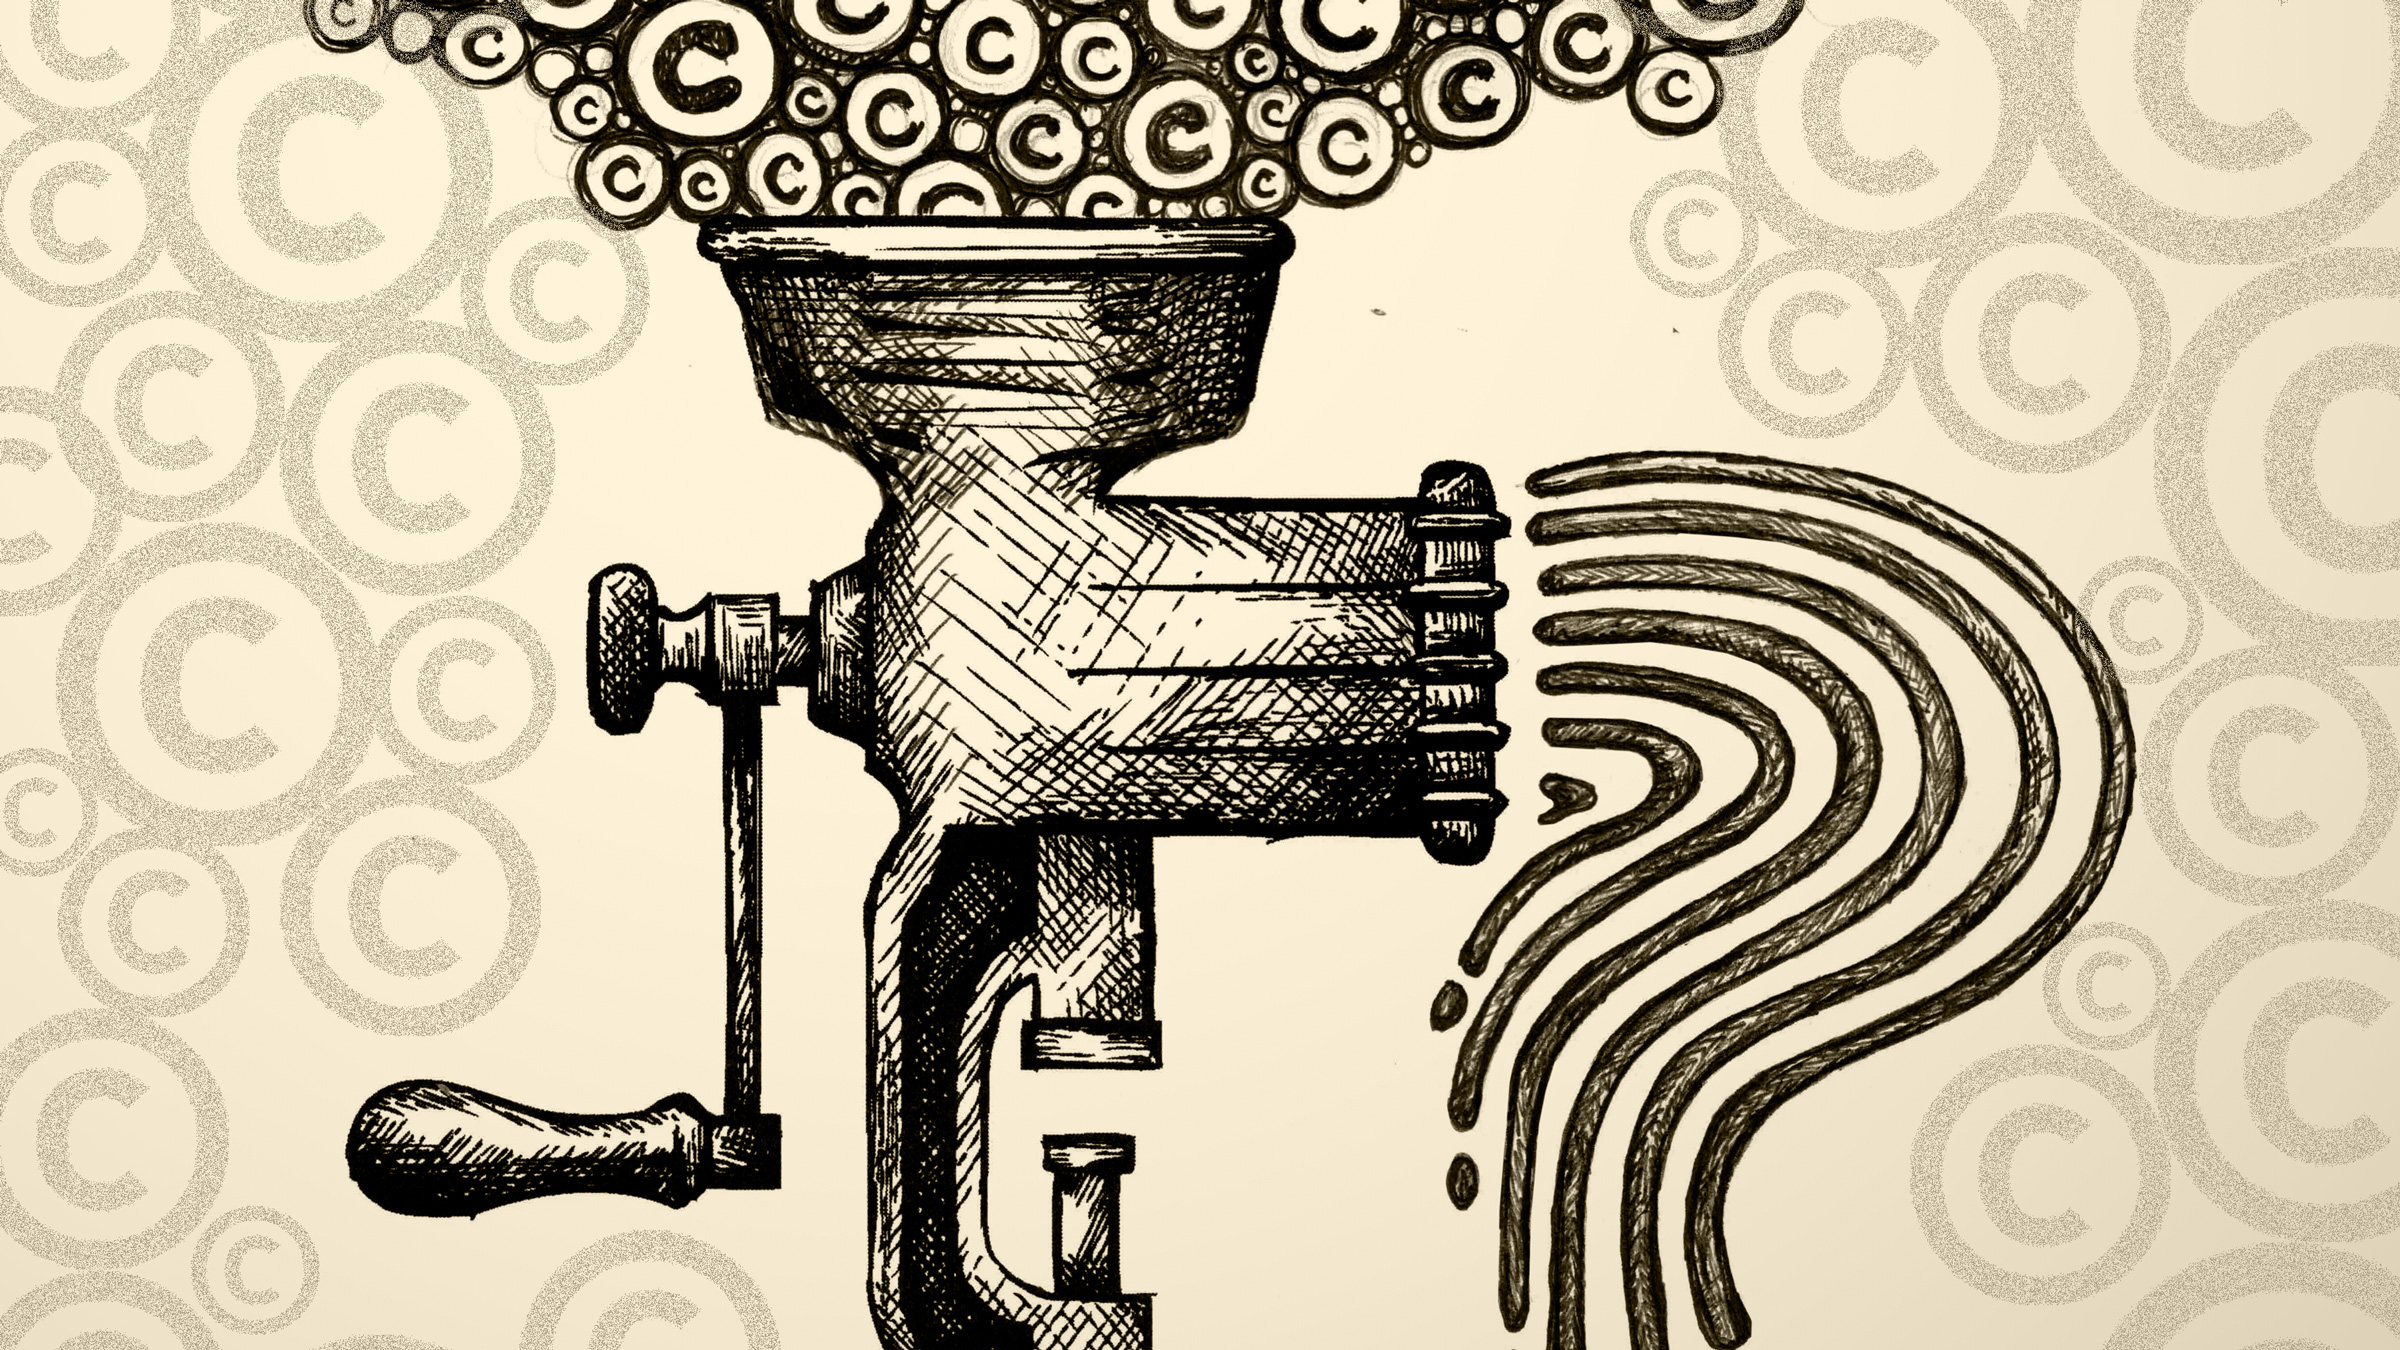 copyright symbols being fed into a hand grinder, illustration